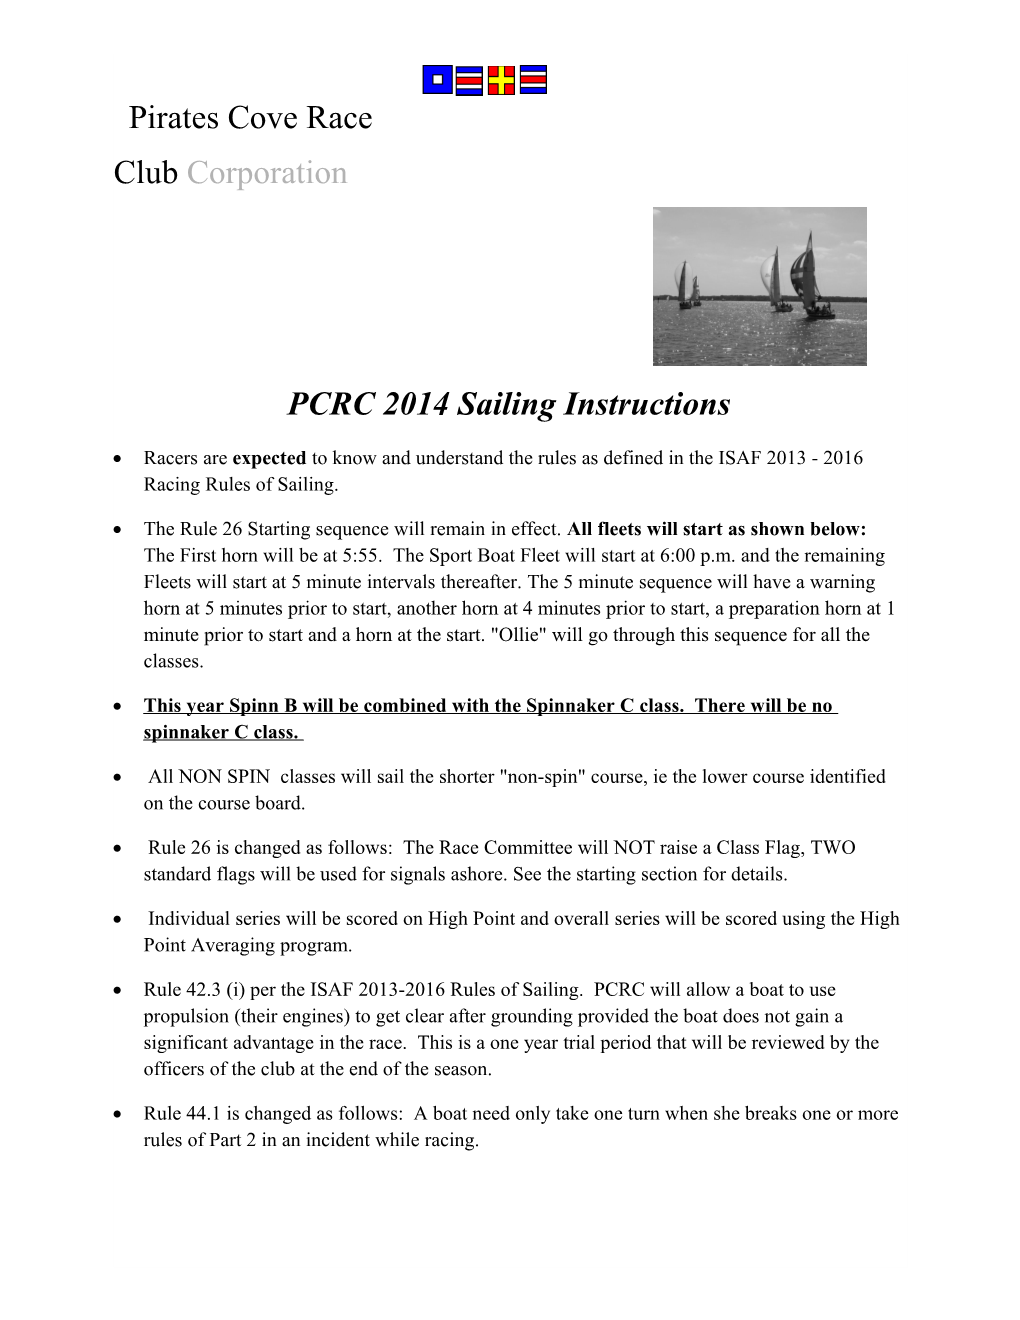 PCRC 2014 Sailing Instructions